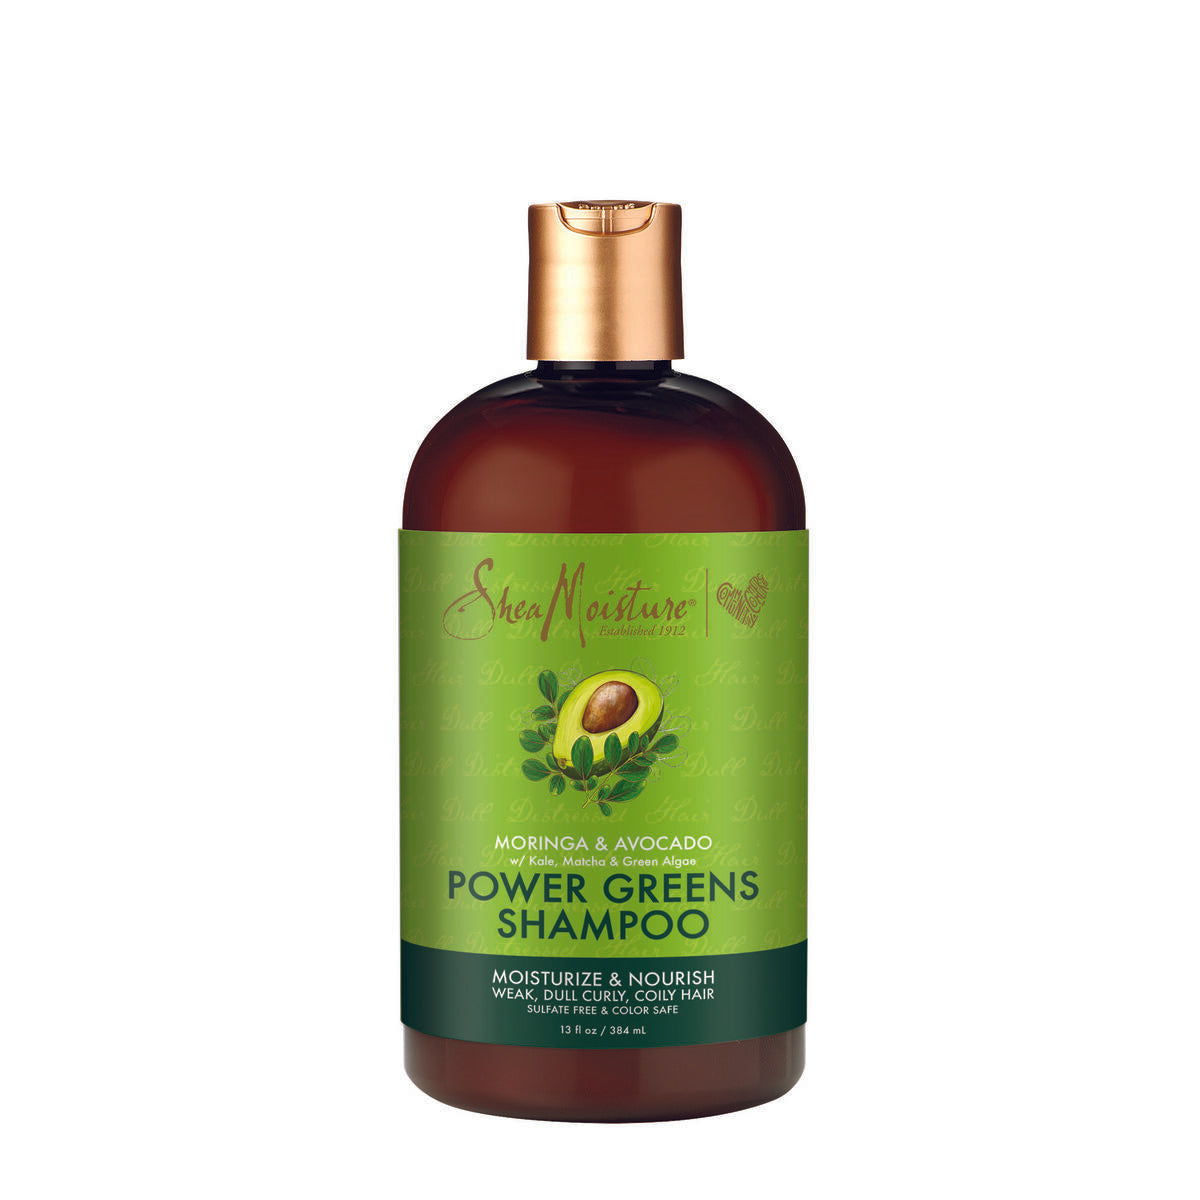 Shea Moisture Moringa & Avocado Power Greens Shampoo (384 ml) Shea Moisture